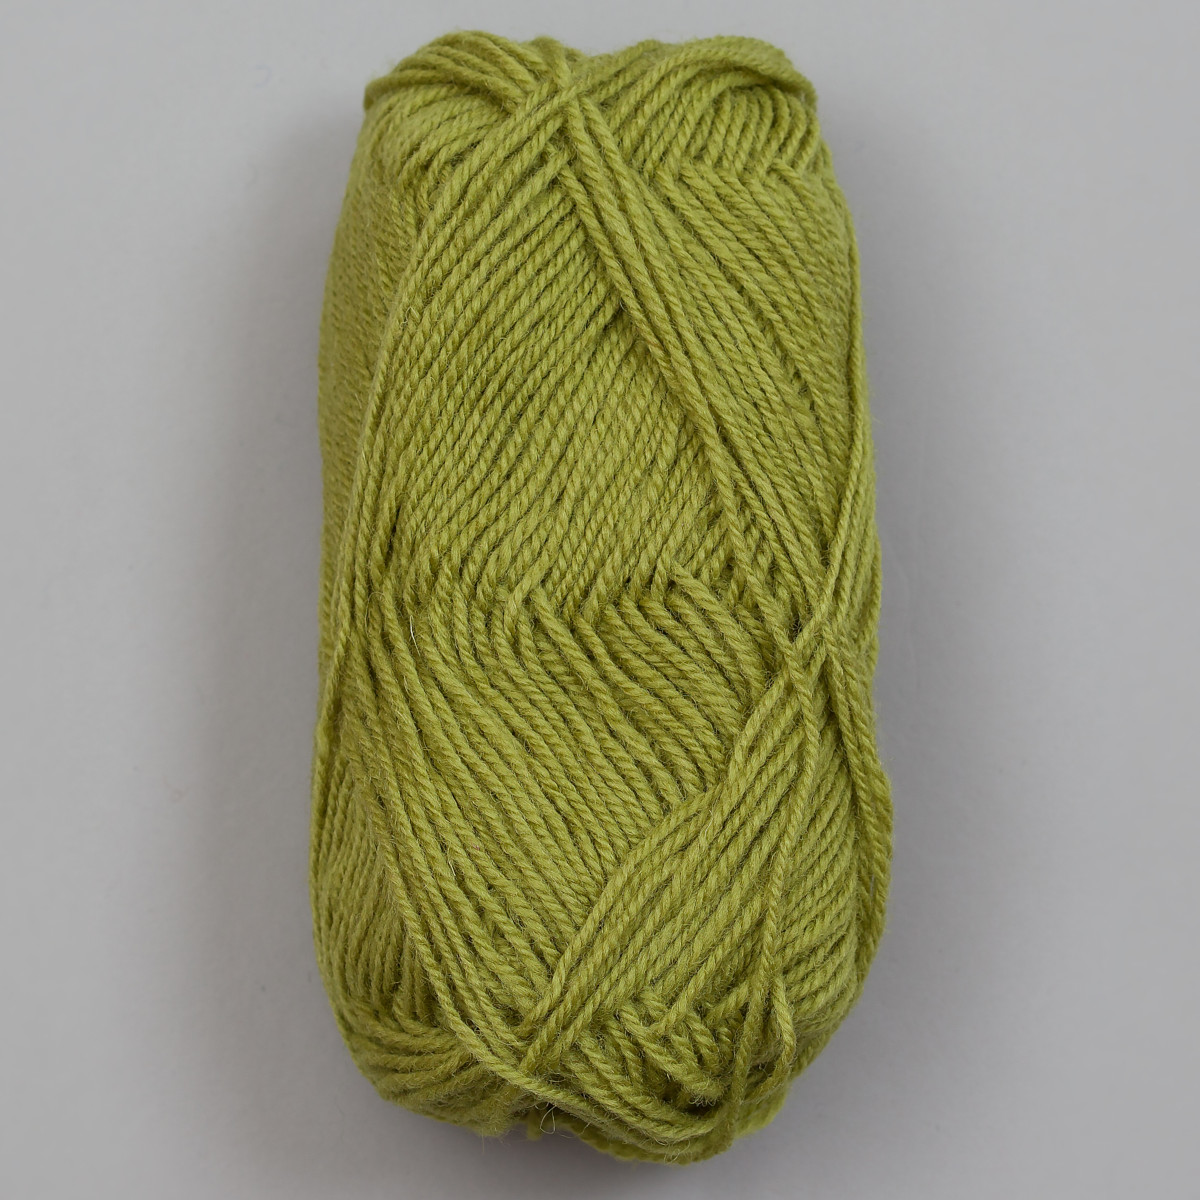 3-tråds strikkegarn - Eplegrønn (198)